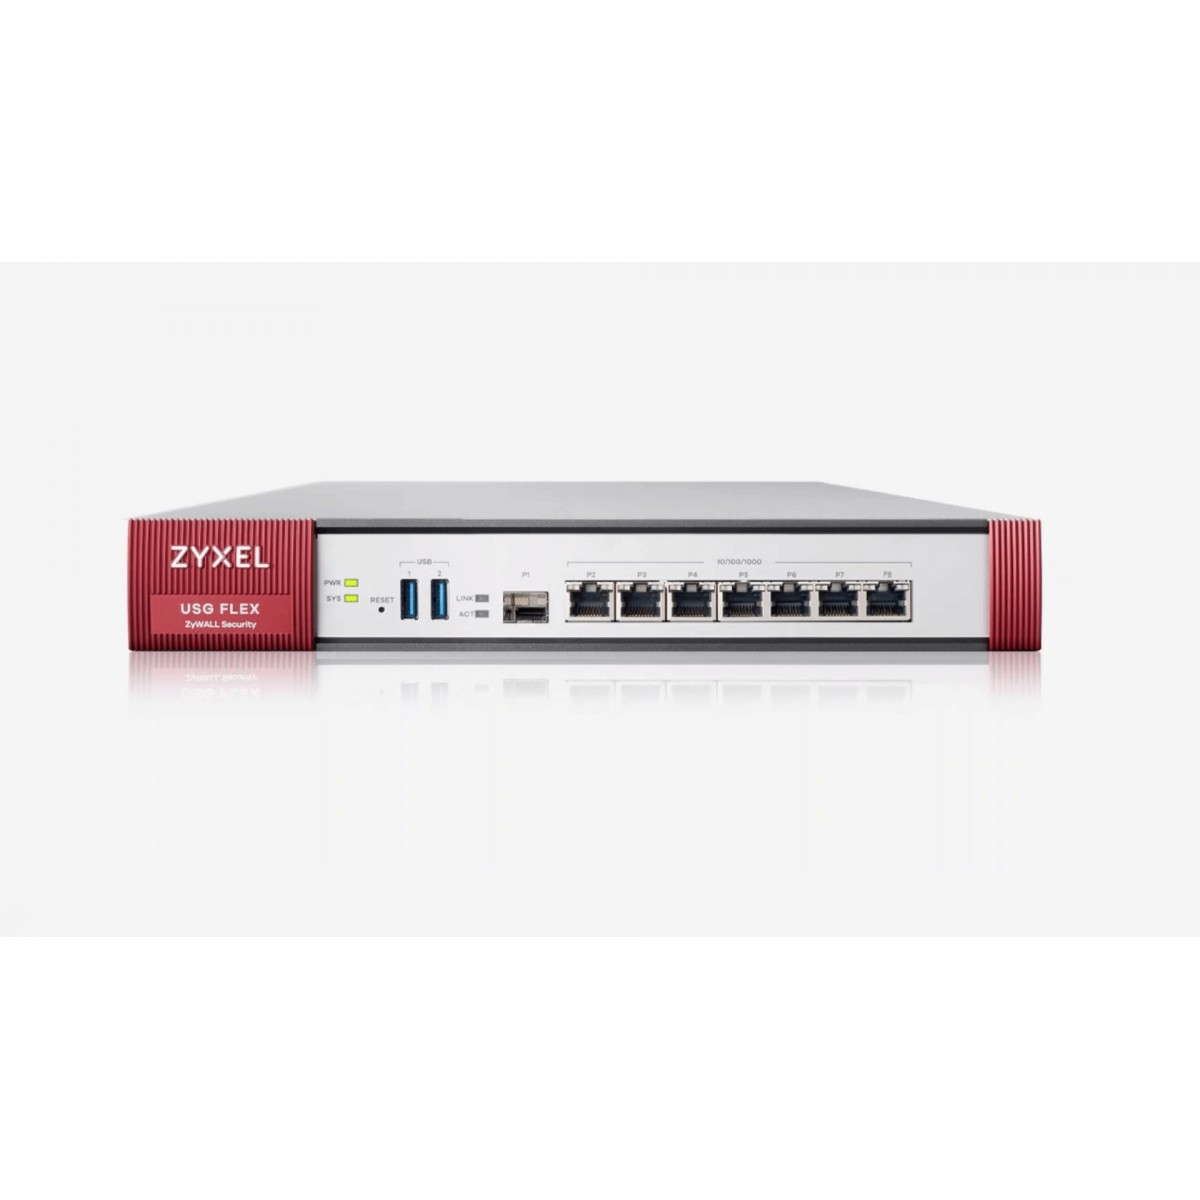 Zyxel USG Flex Firewall 10/100/1000, 2*WAN, 4*LAN/DMZ ports, 1*SFP, 2*USB with 1 Yr UTM bundle